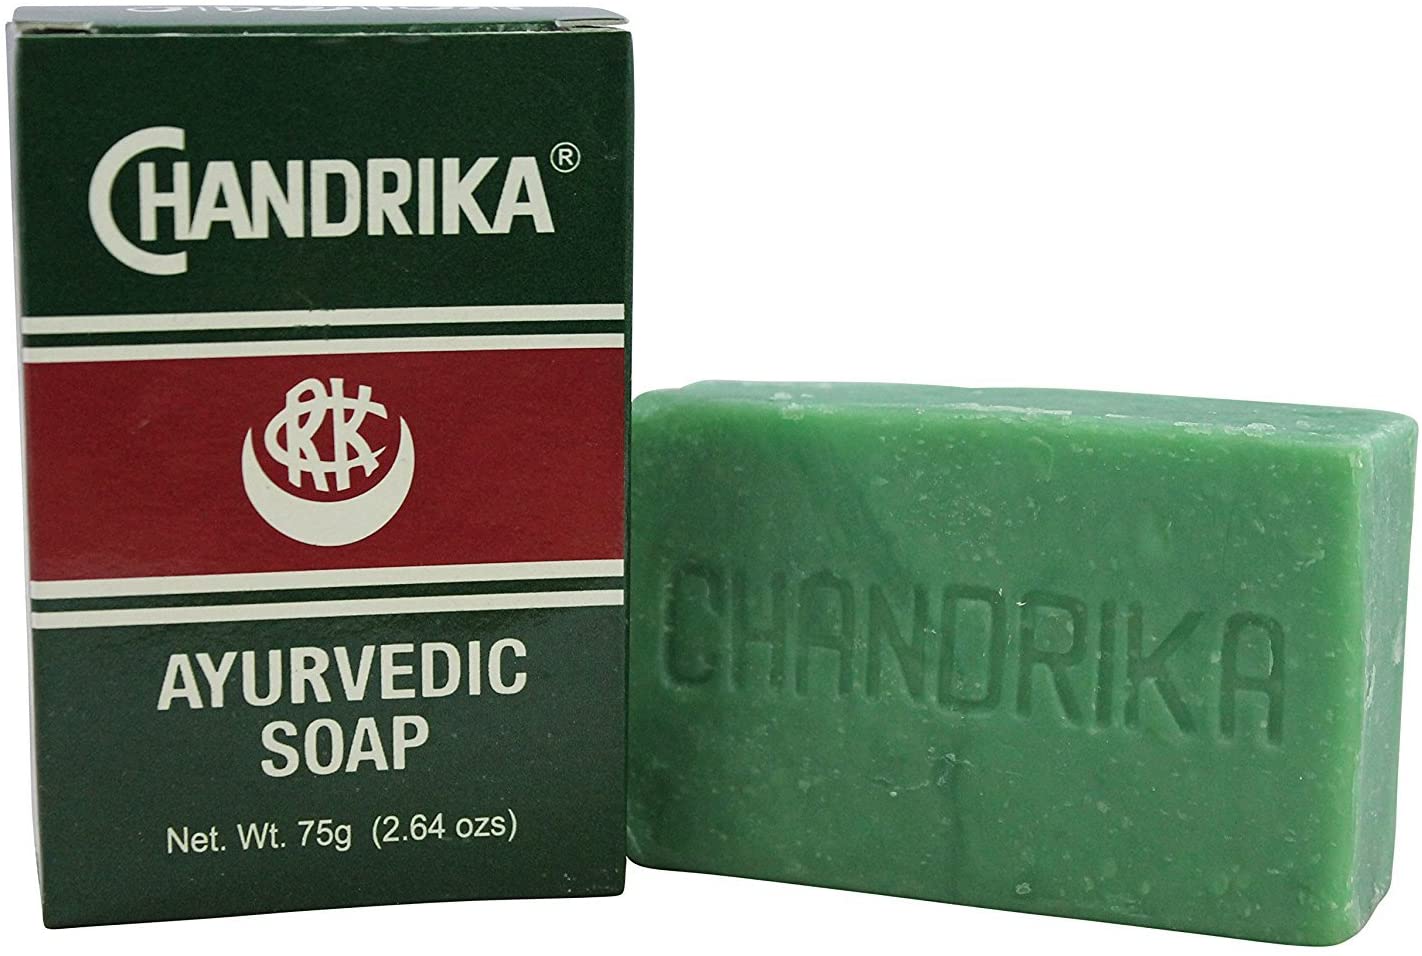 Product Listing Image for Chandrika Ayurvedic Soap